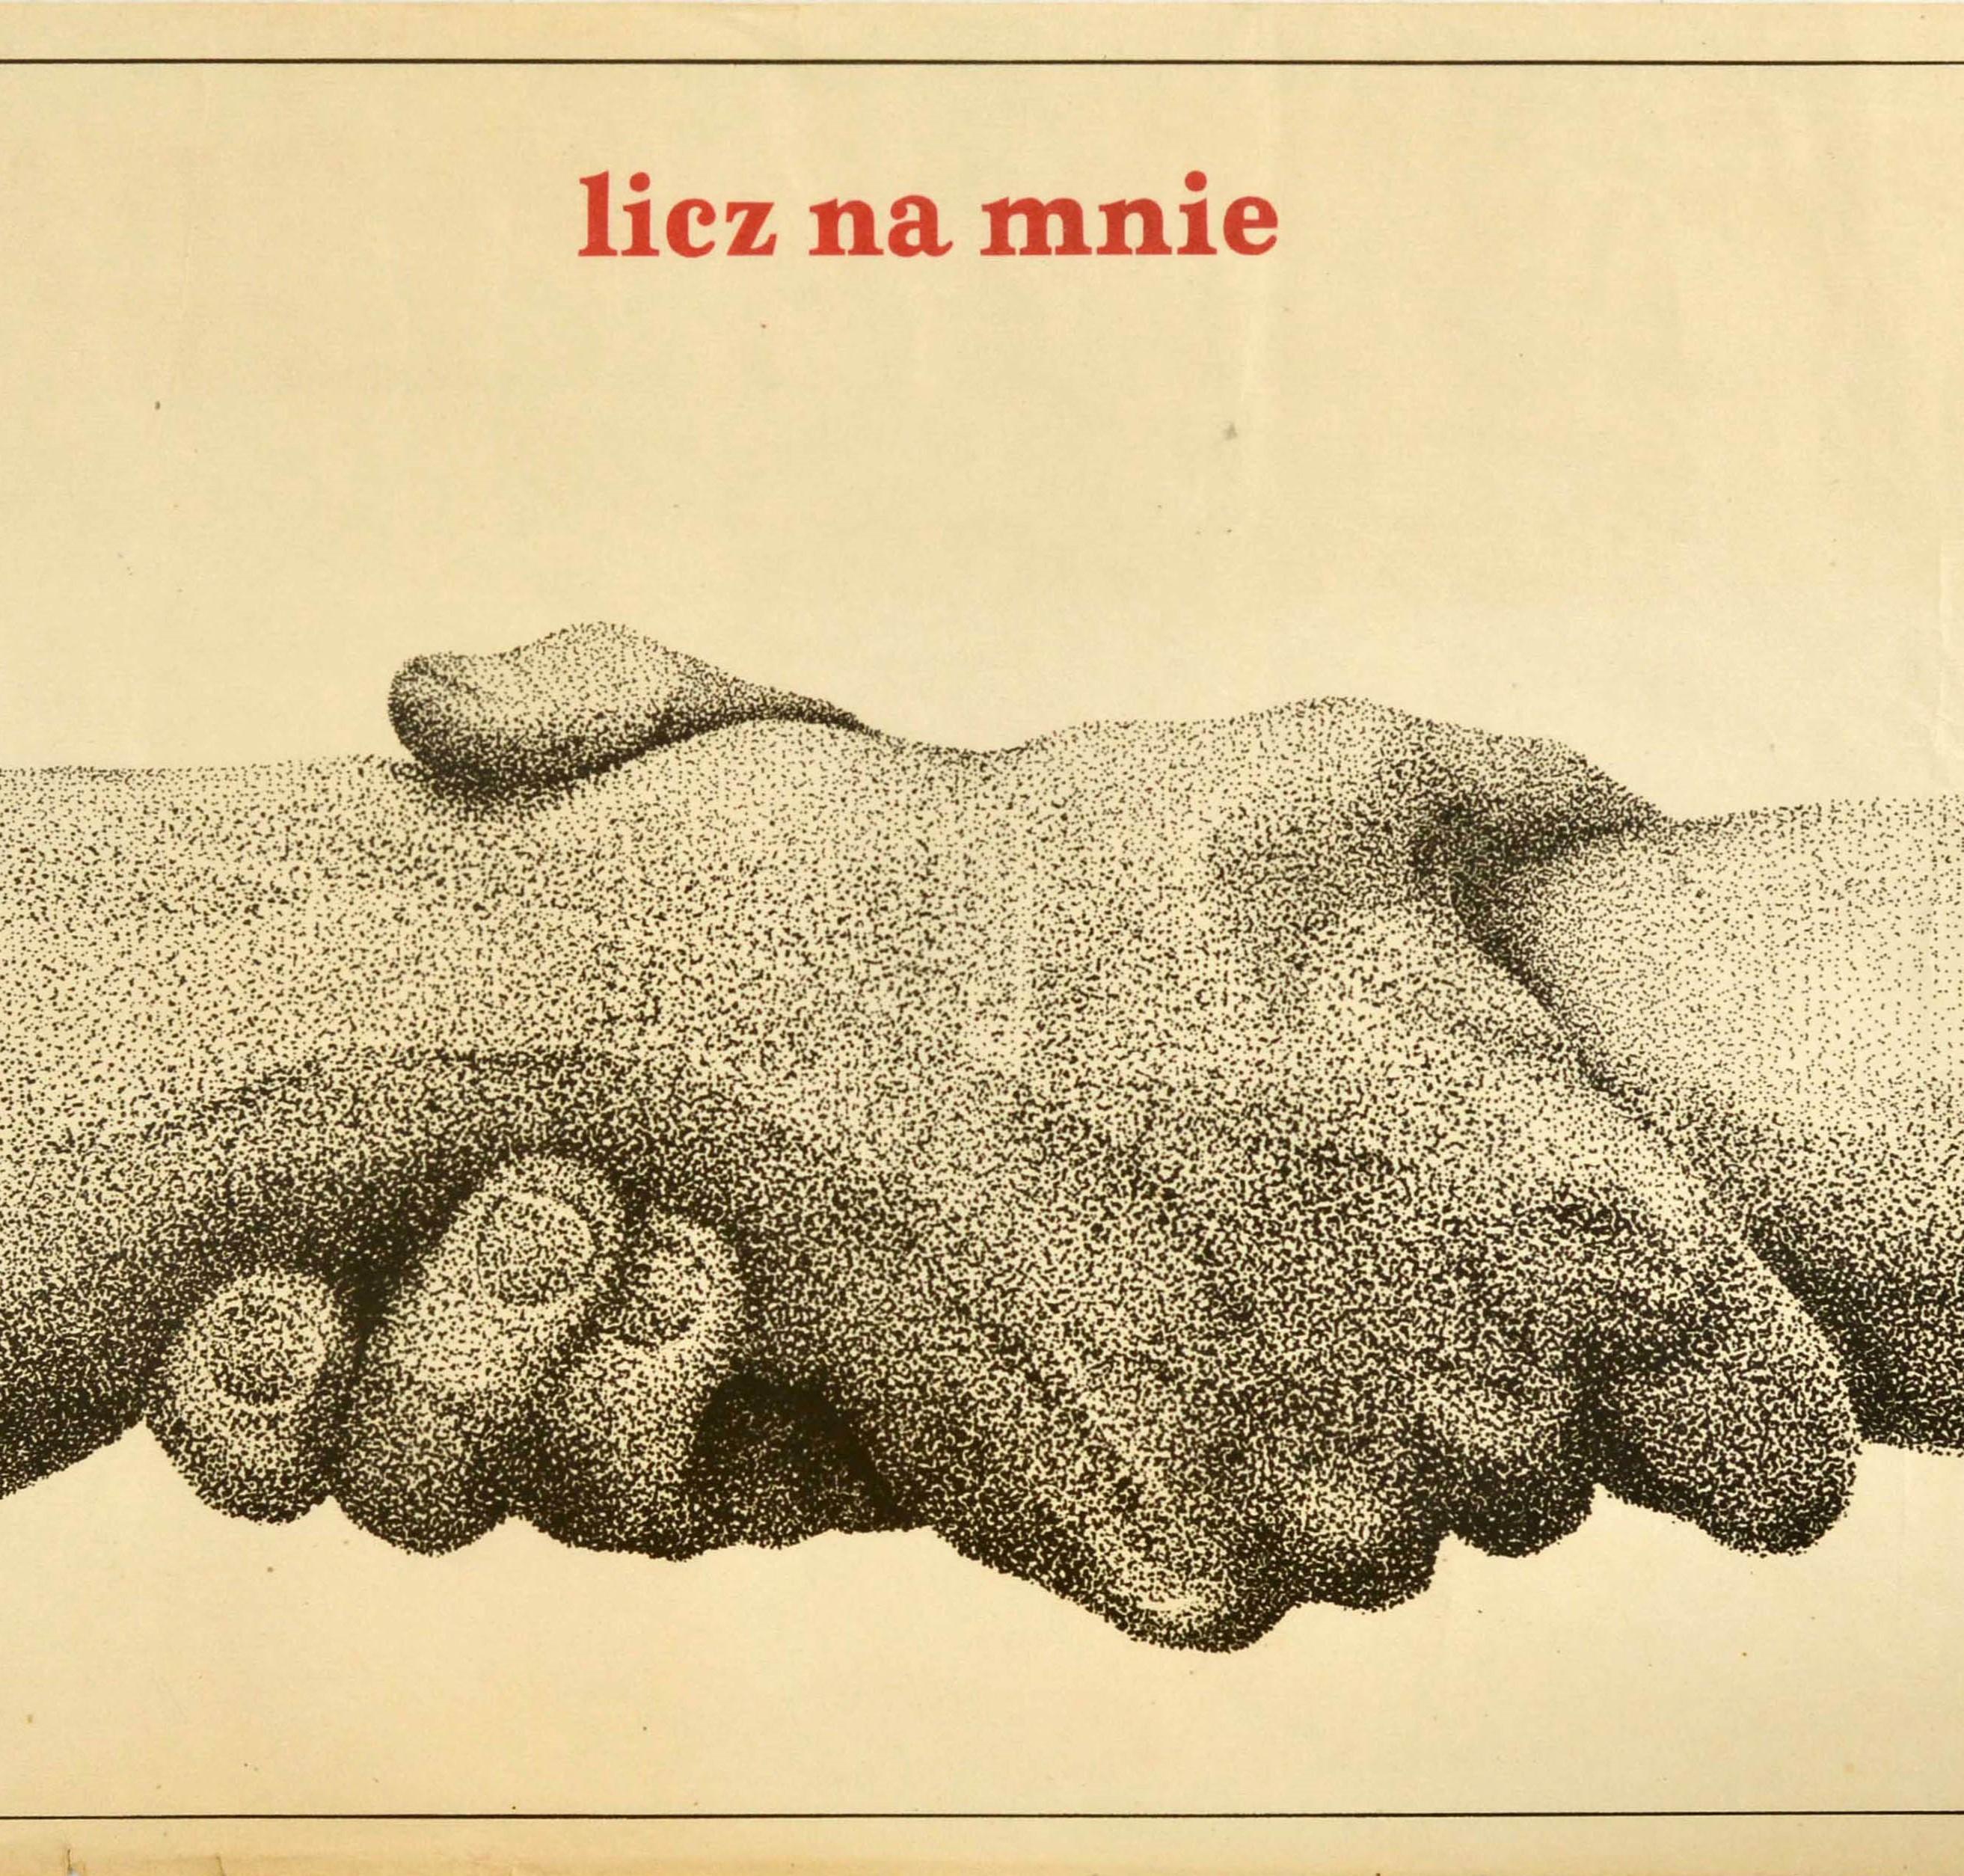 Original Vintage Poster Licz Na Mnie Solidarnosc Poland Solidarity Count On Me - Print by Budecki